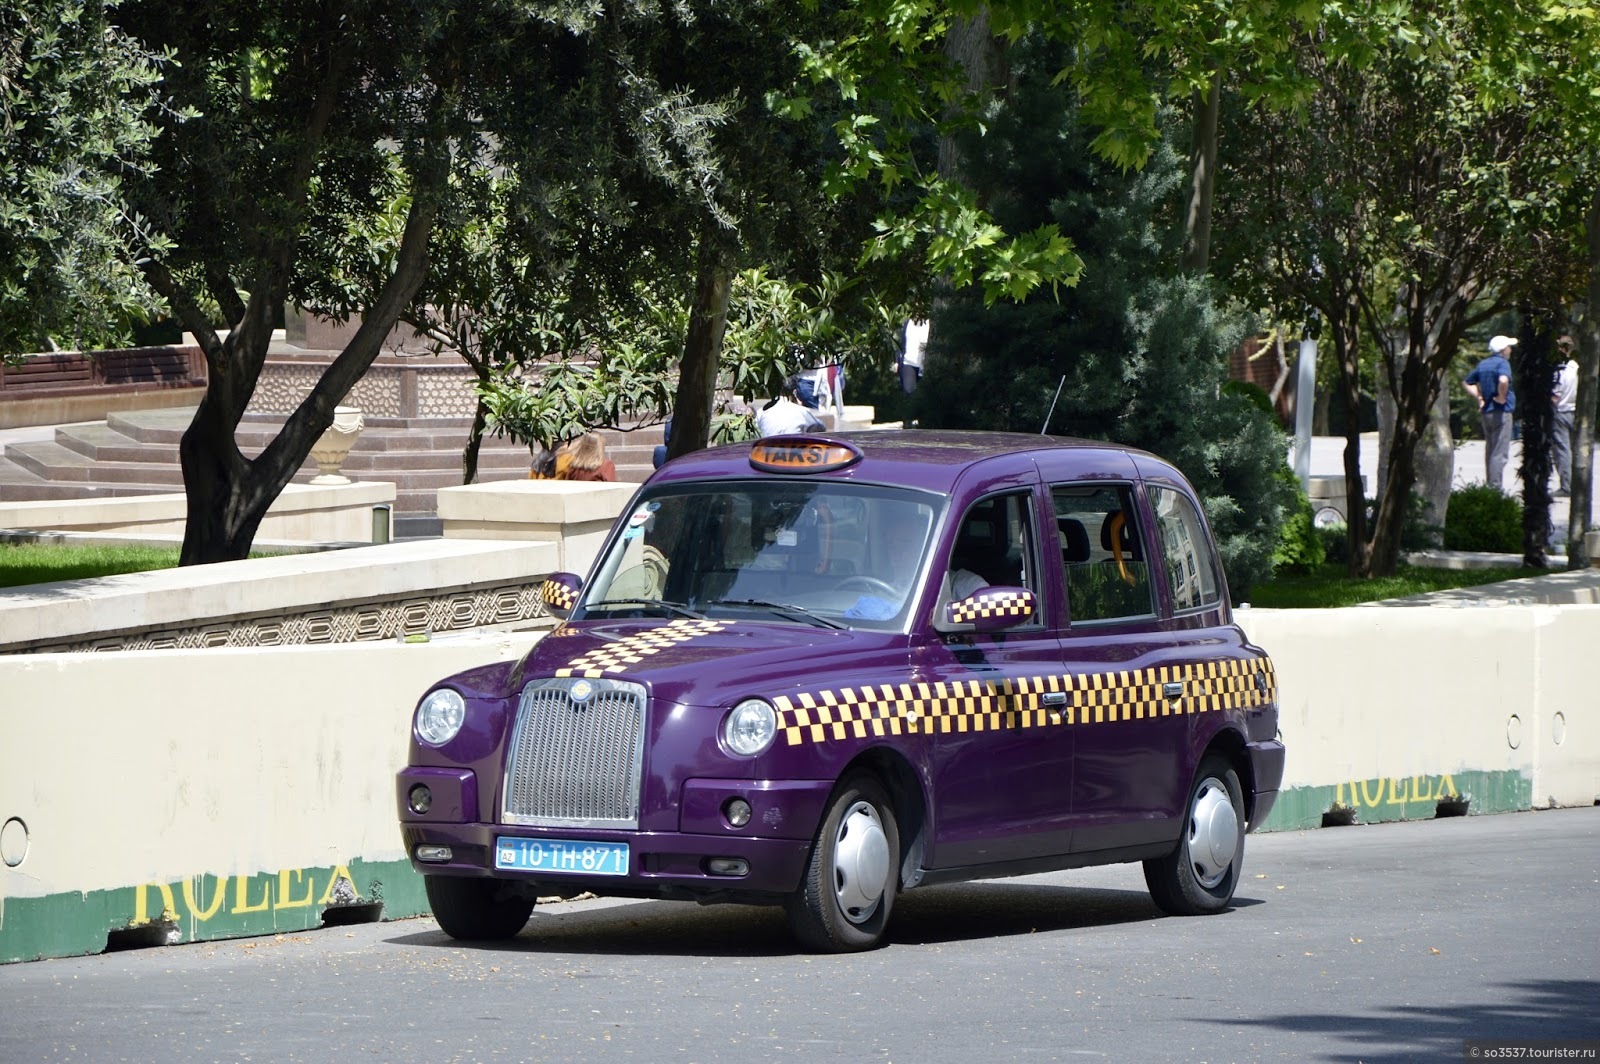 Такси в азербайджане. Такси в Баку баклажан. КЭБ В Баку. Лондон такси в Баку. Такси баклажан в Азербайджане.